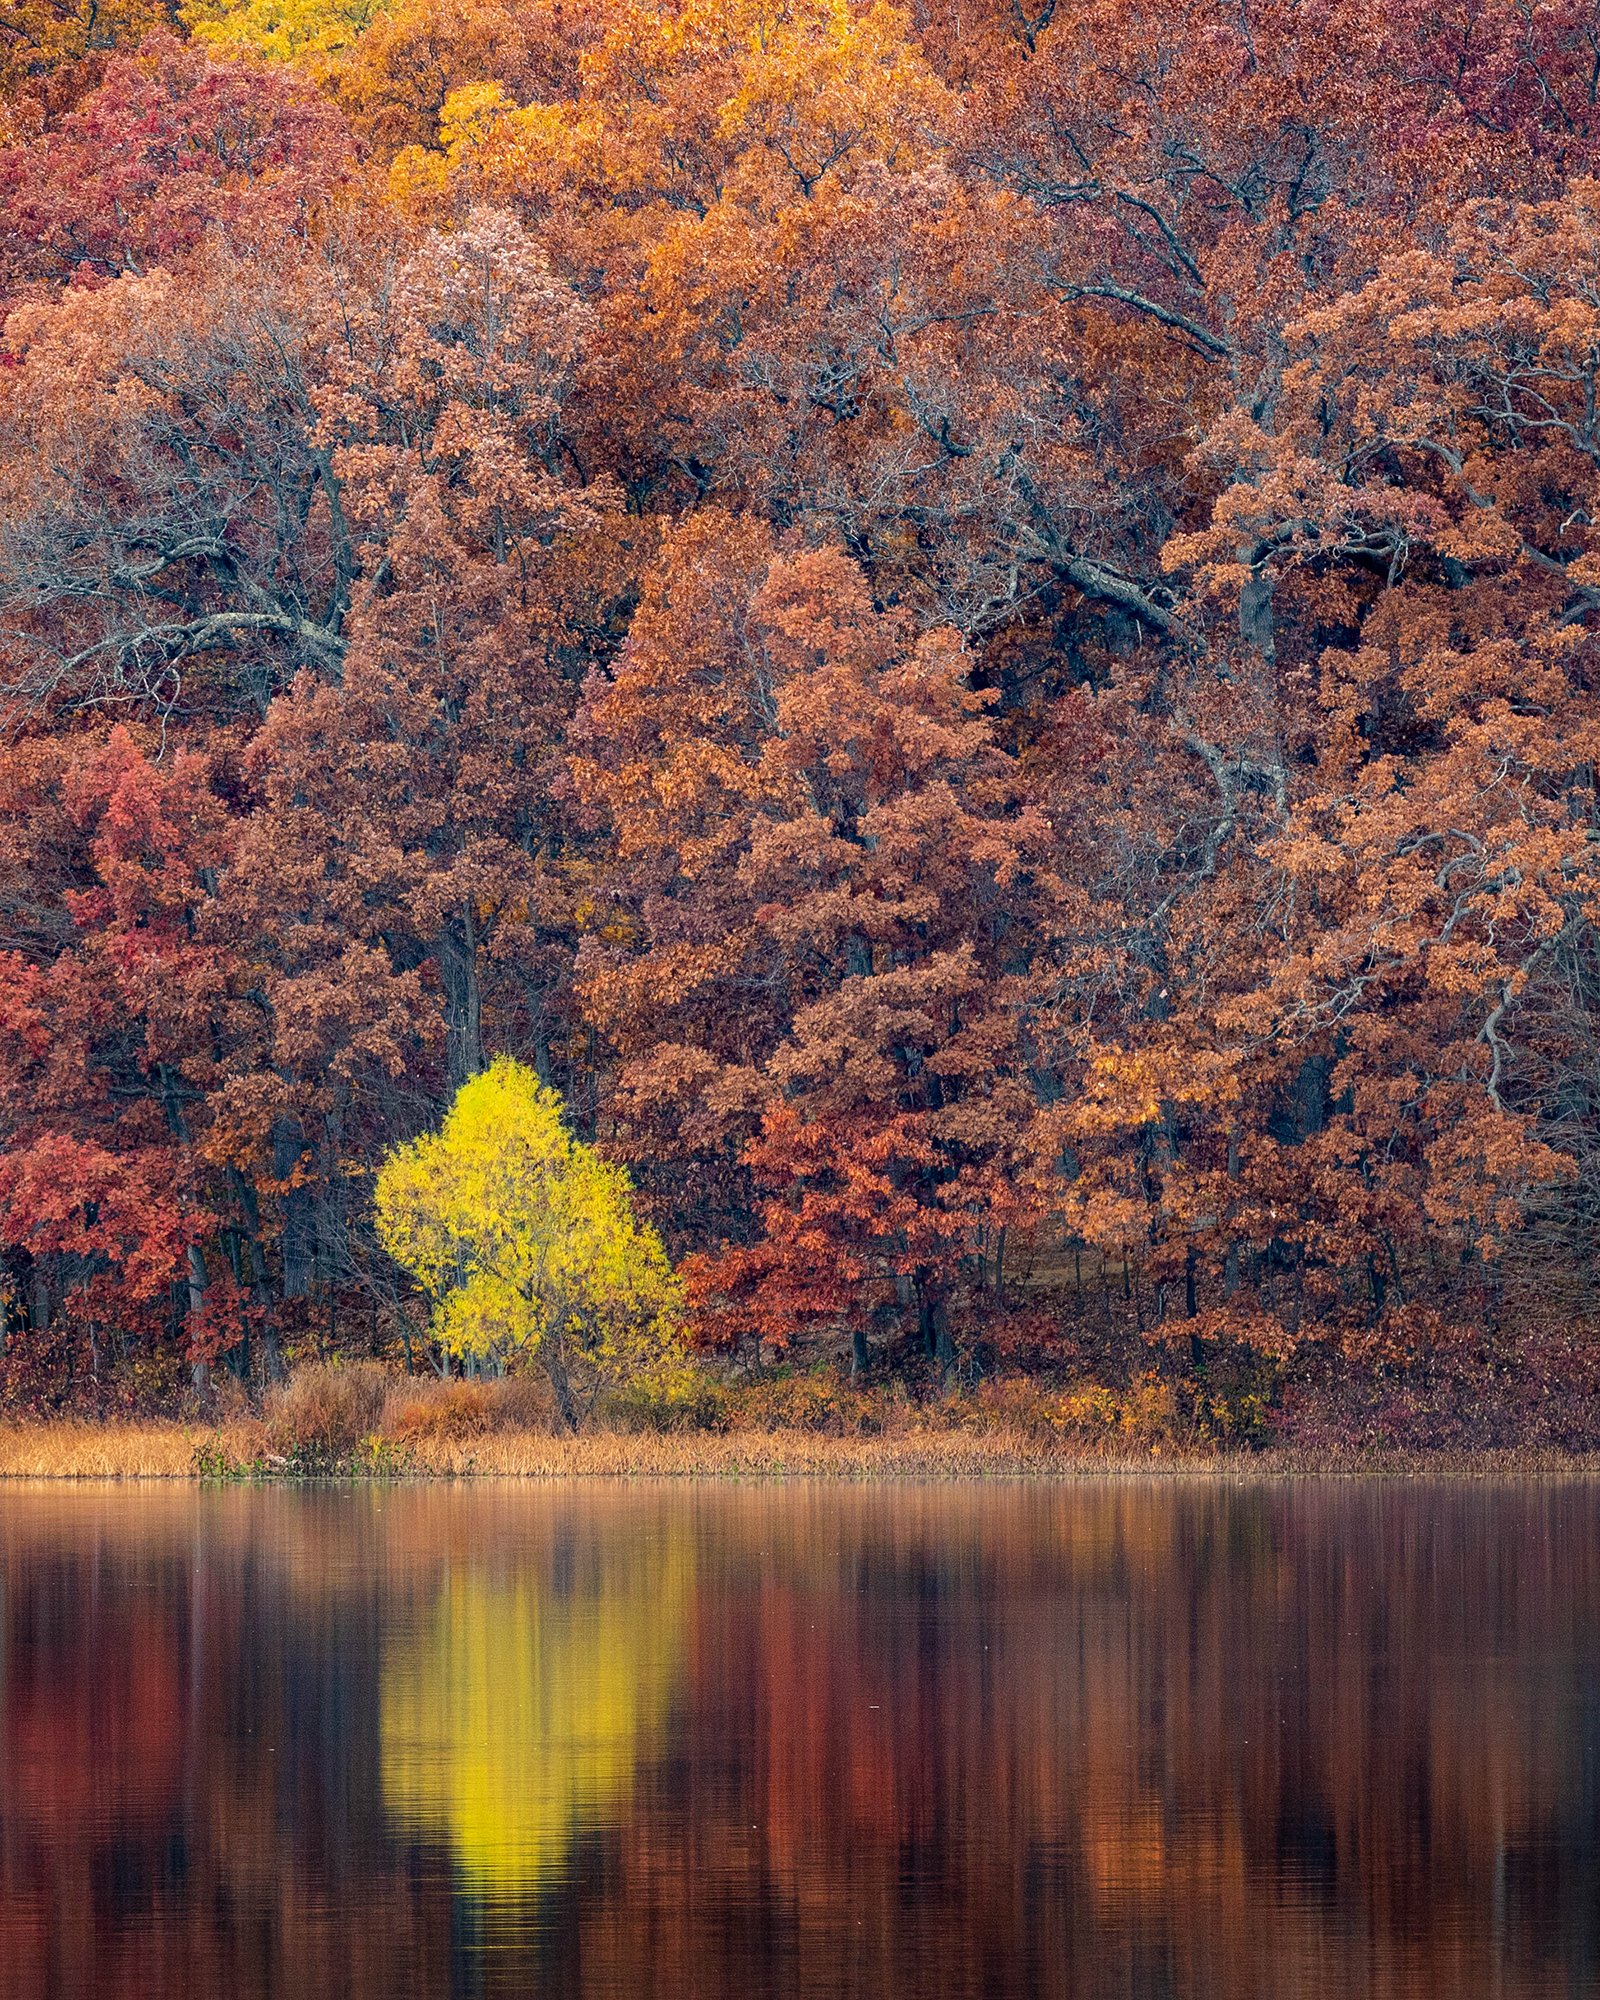  Fall reflections on Pickerel Lake 